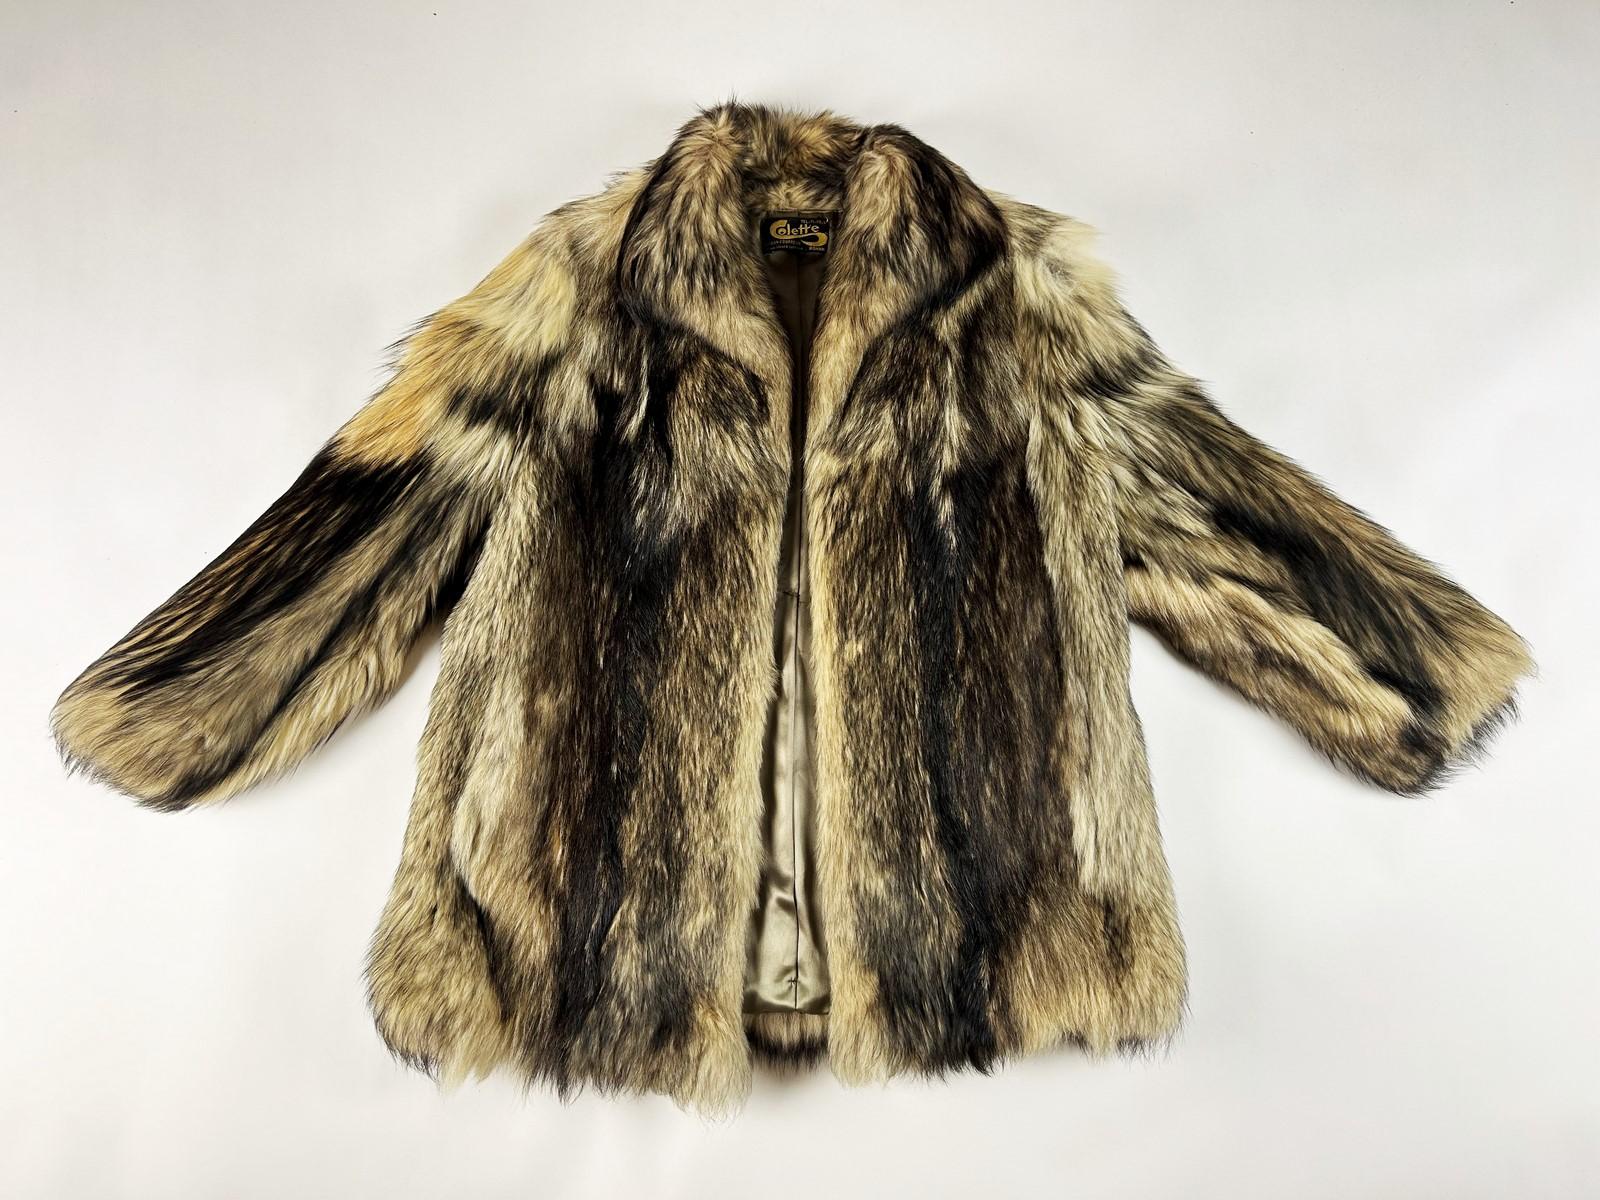 Marmot Fur Coat by Maison Colette - French Circa 1980 For Sale 9